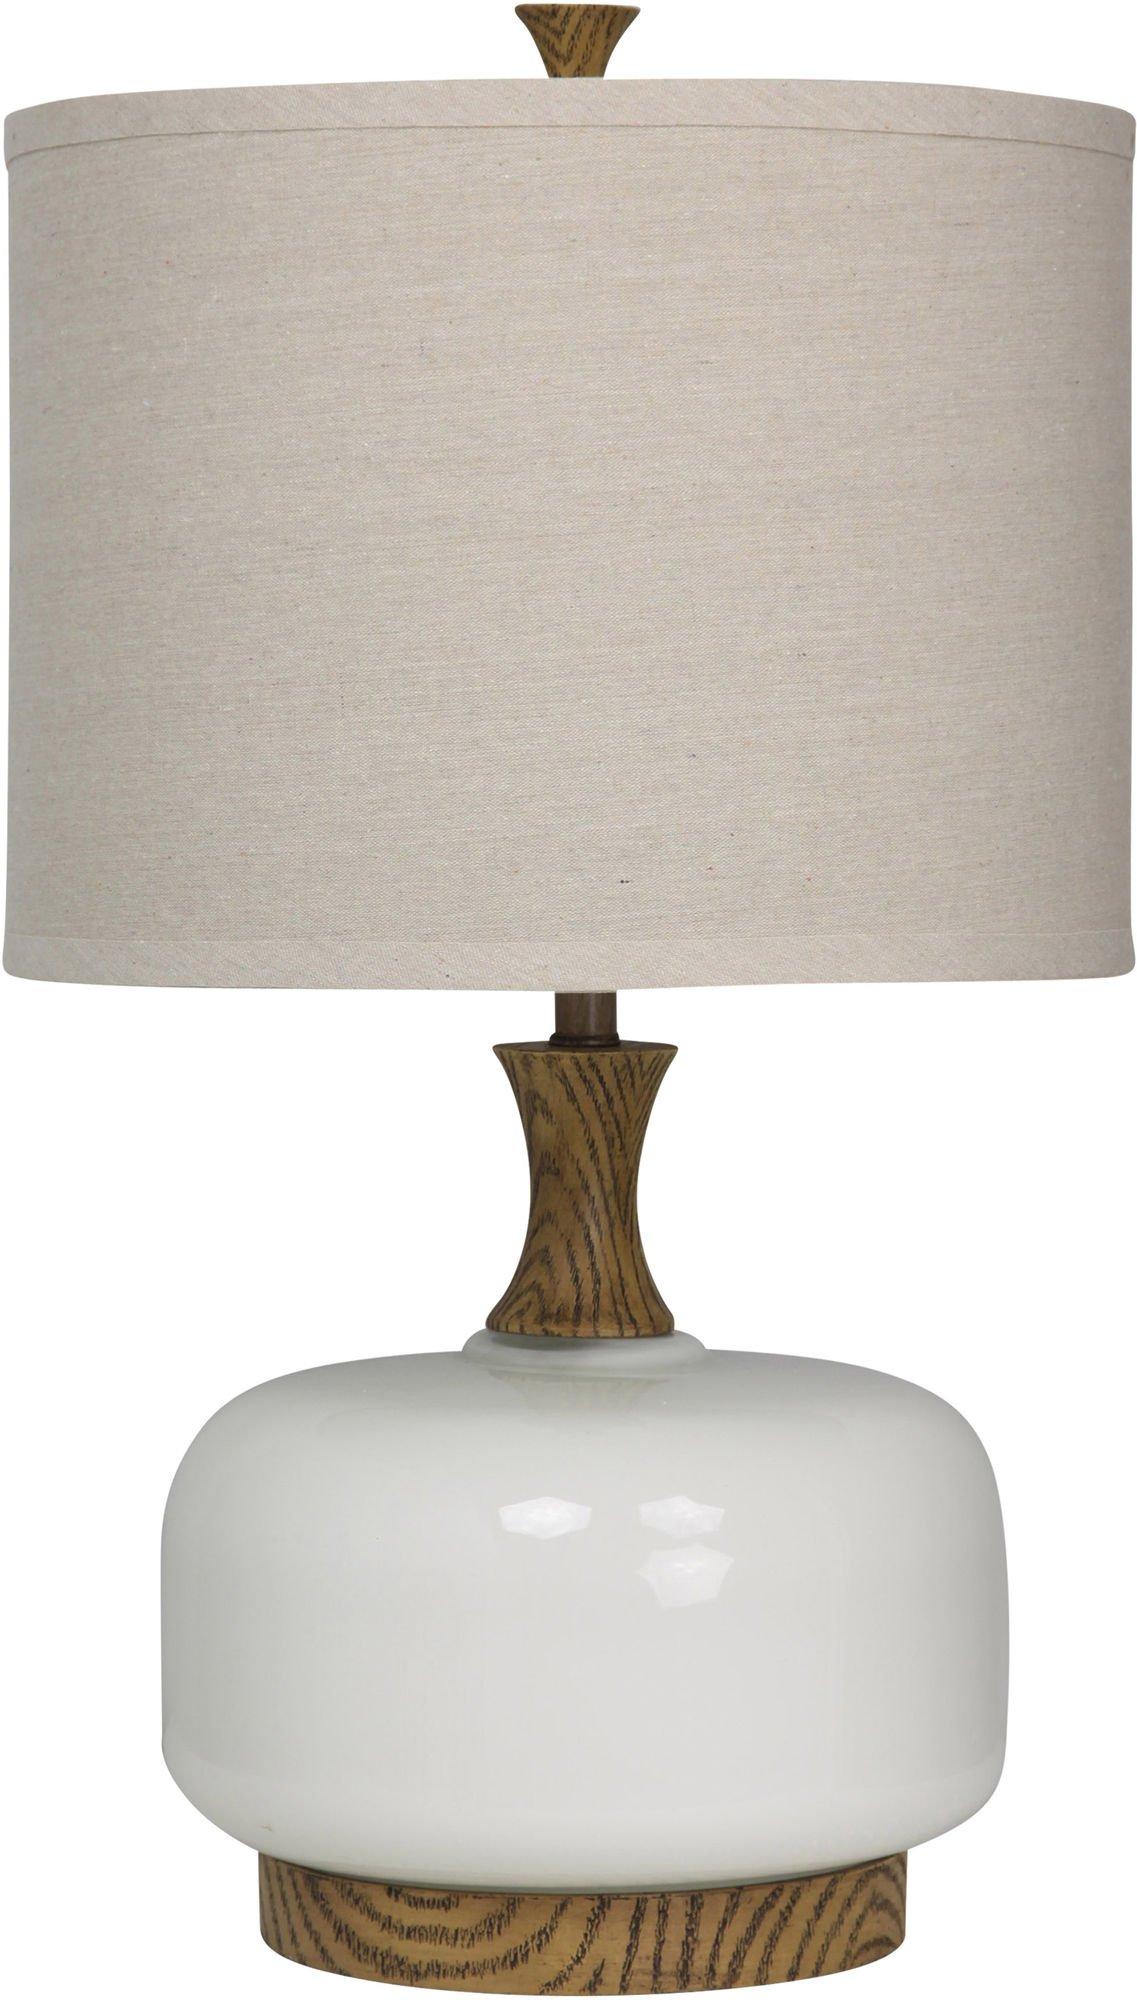 Transitional Wood & Ceramic Table Lamp